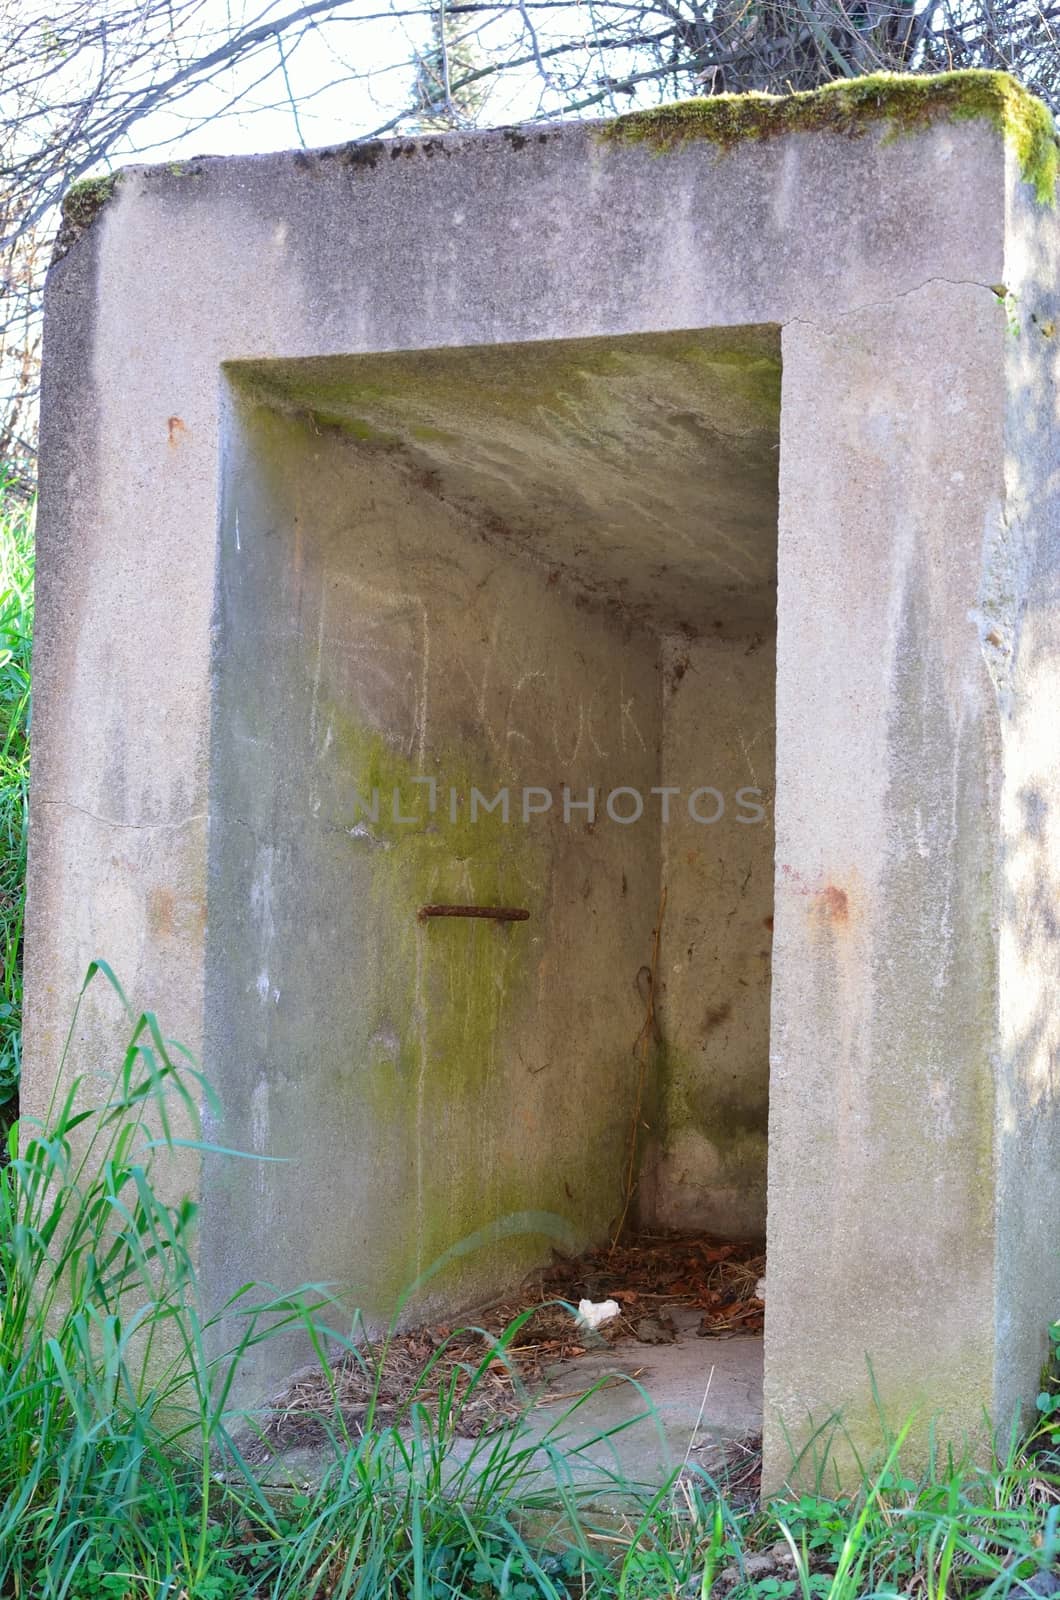 Age bunker entrance by JFsPic